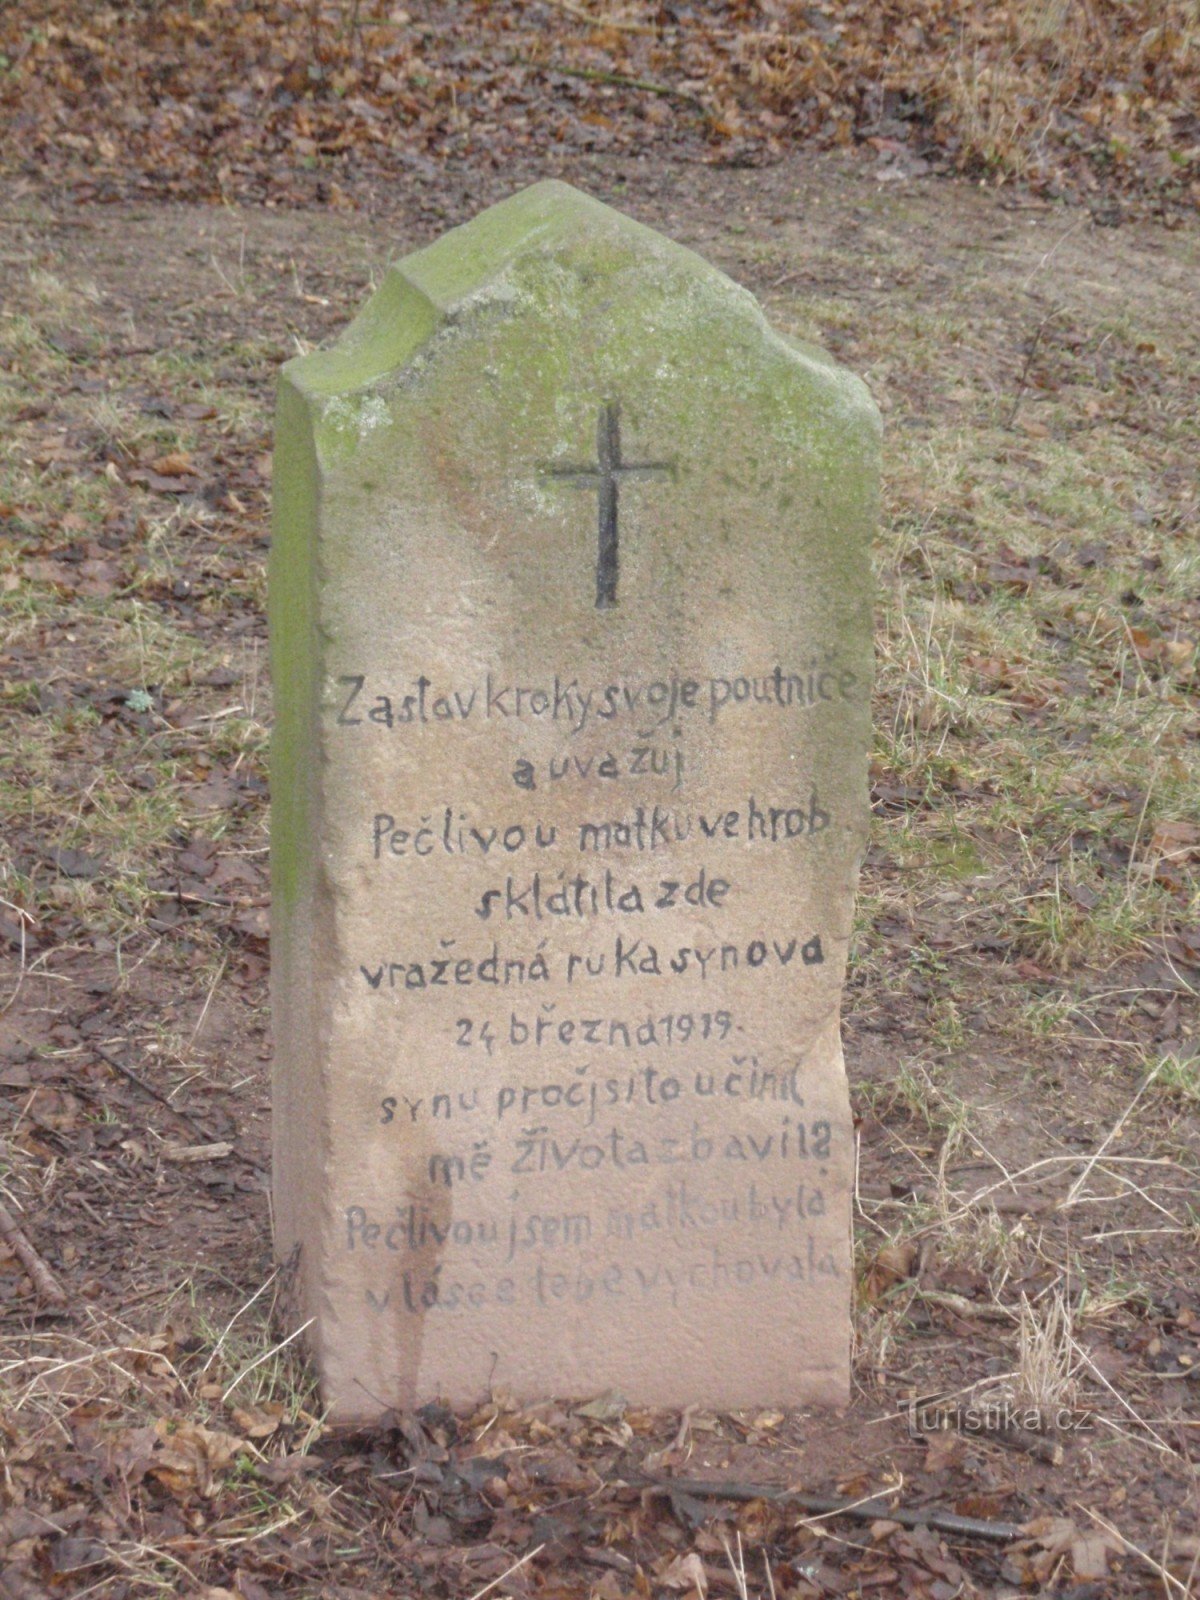 Un mémorial à un ancien meurtre près de Padochov